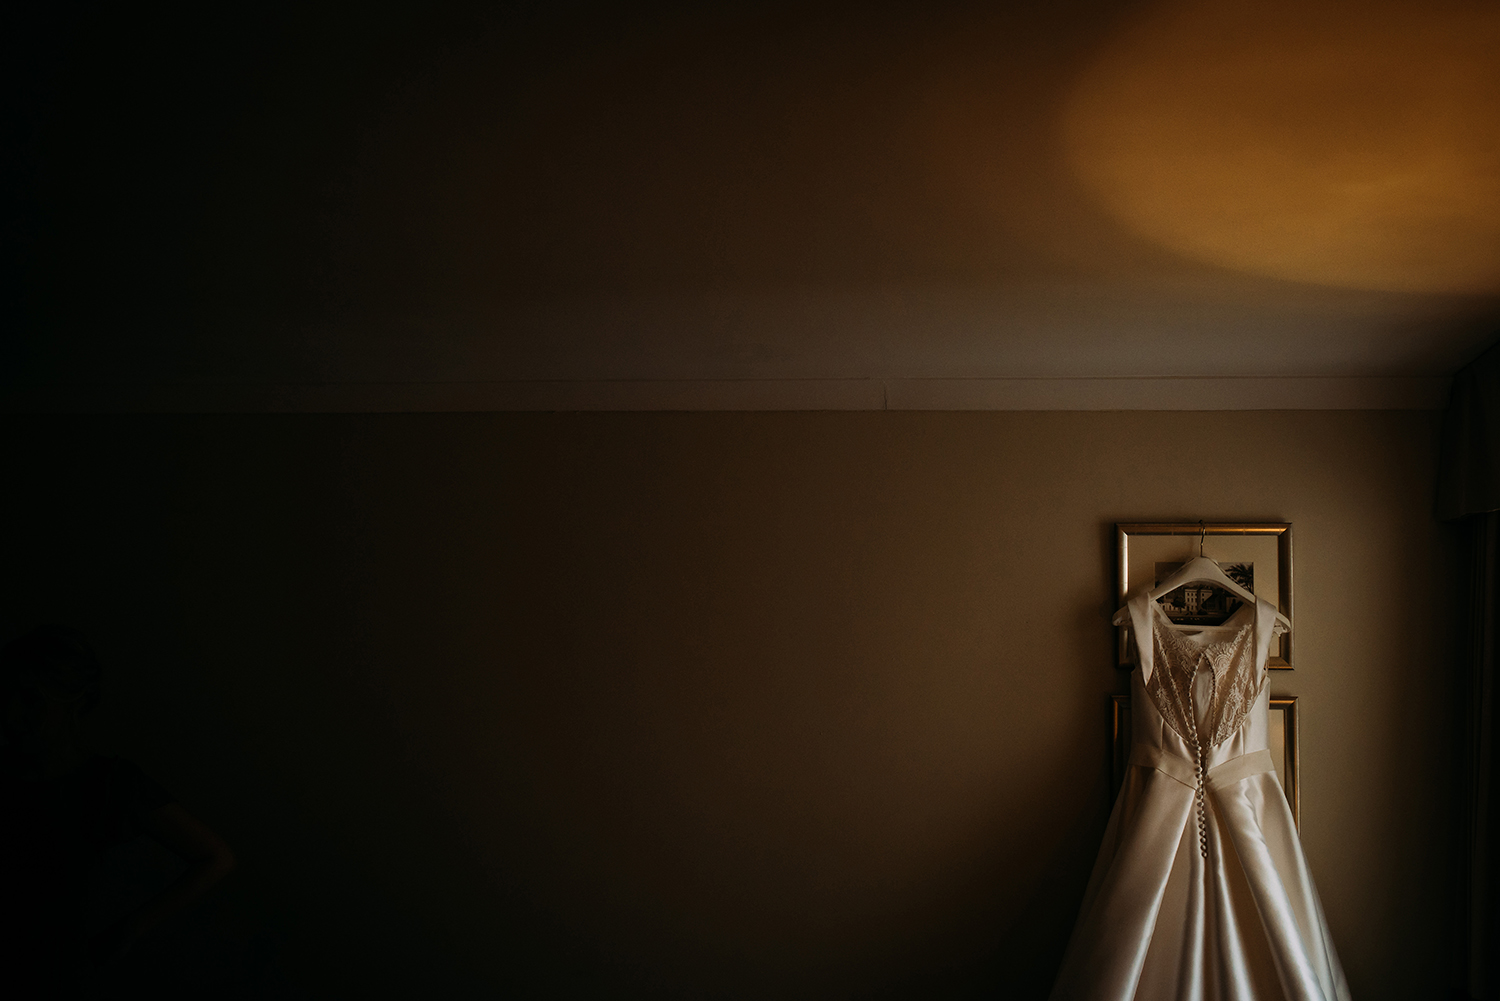  wedding dress hanging on the wall 